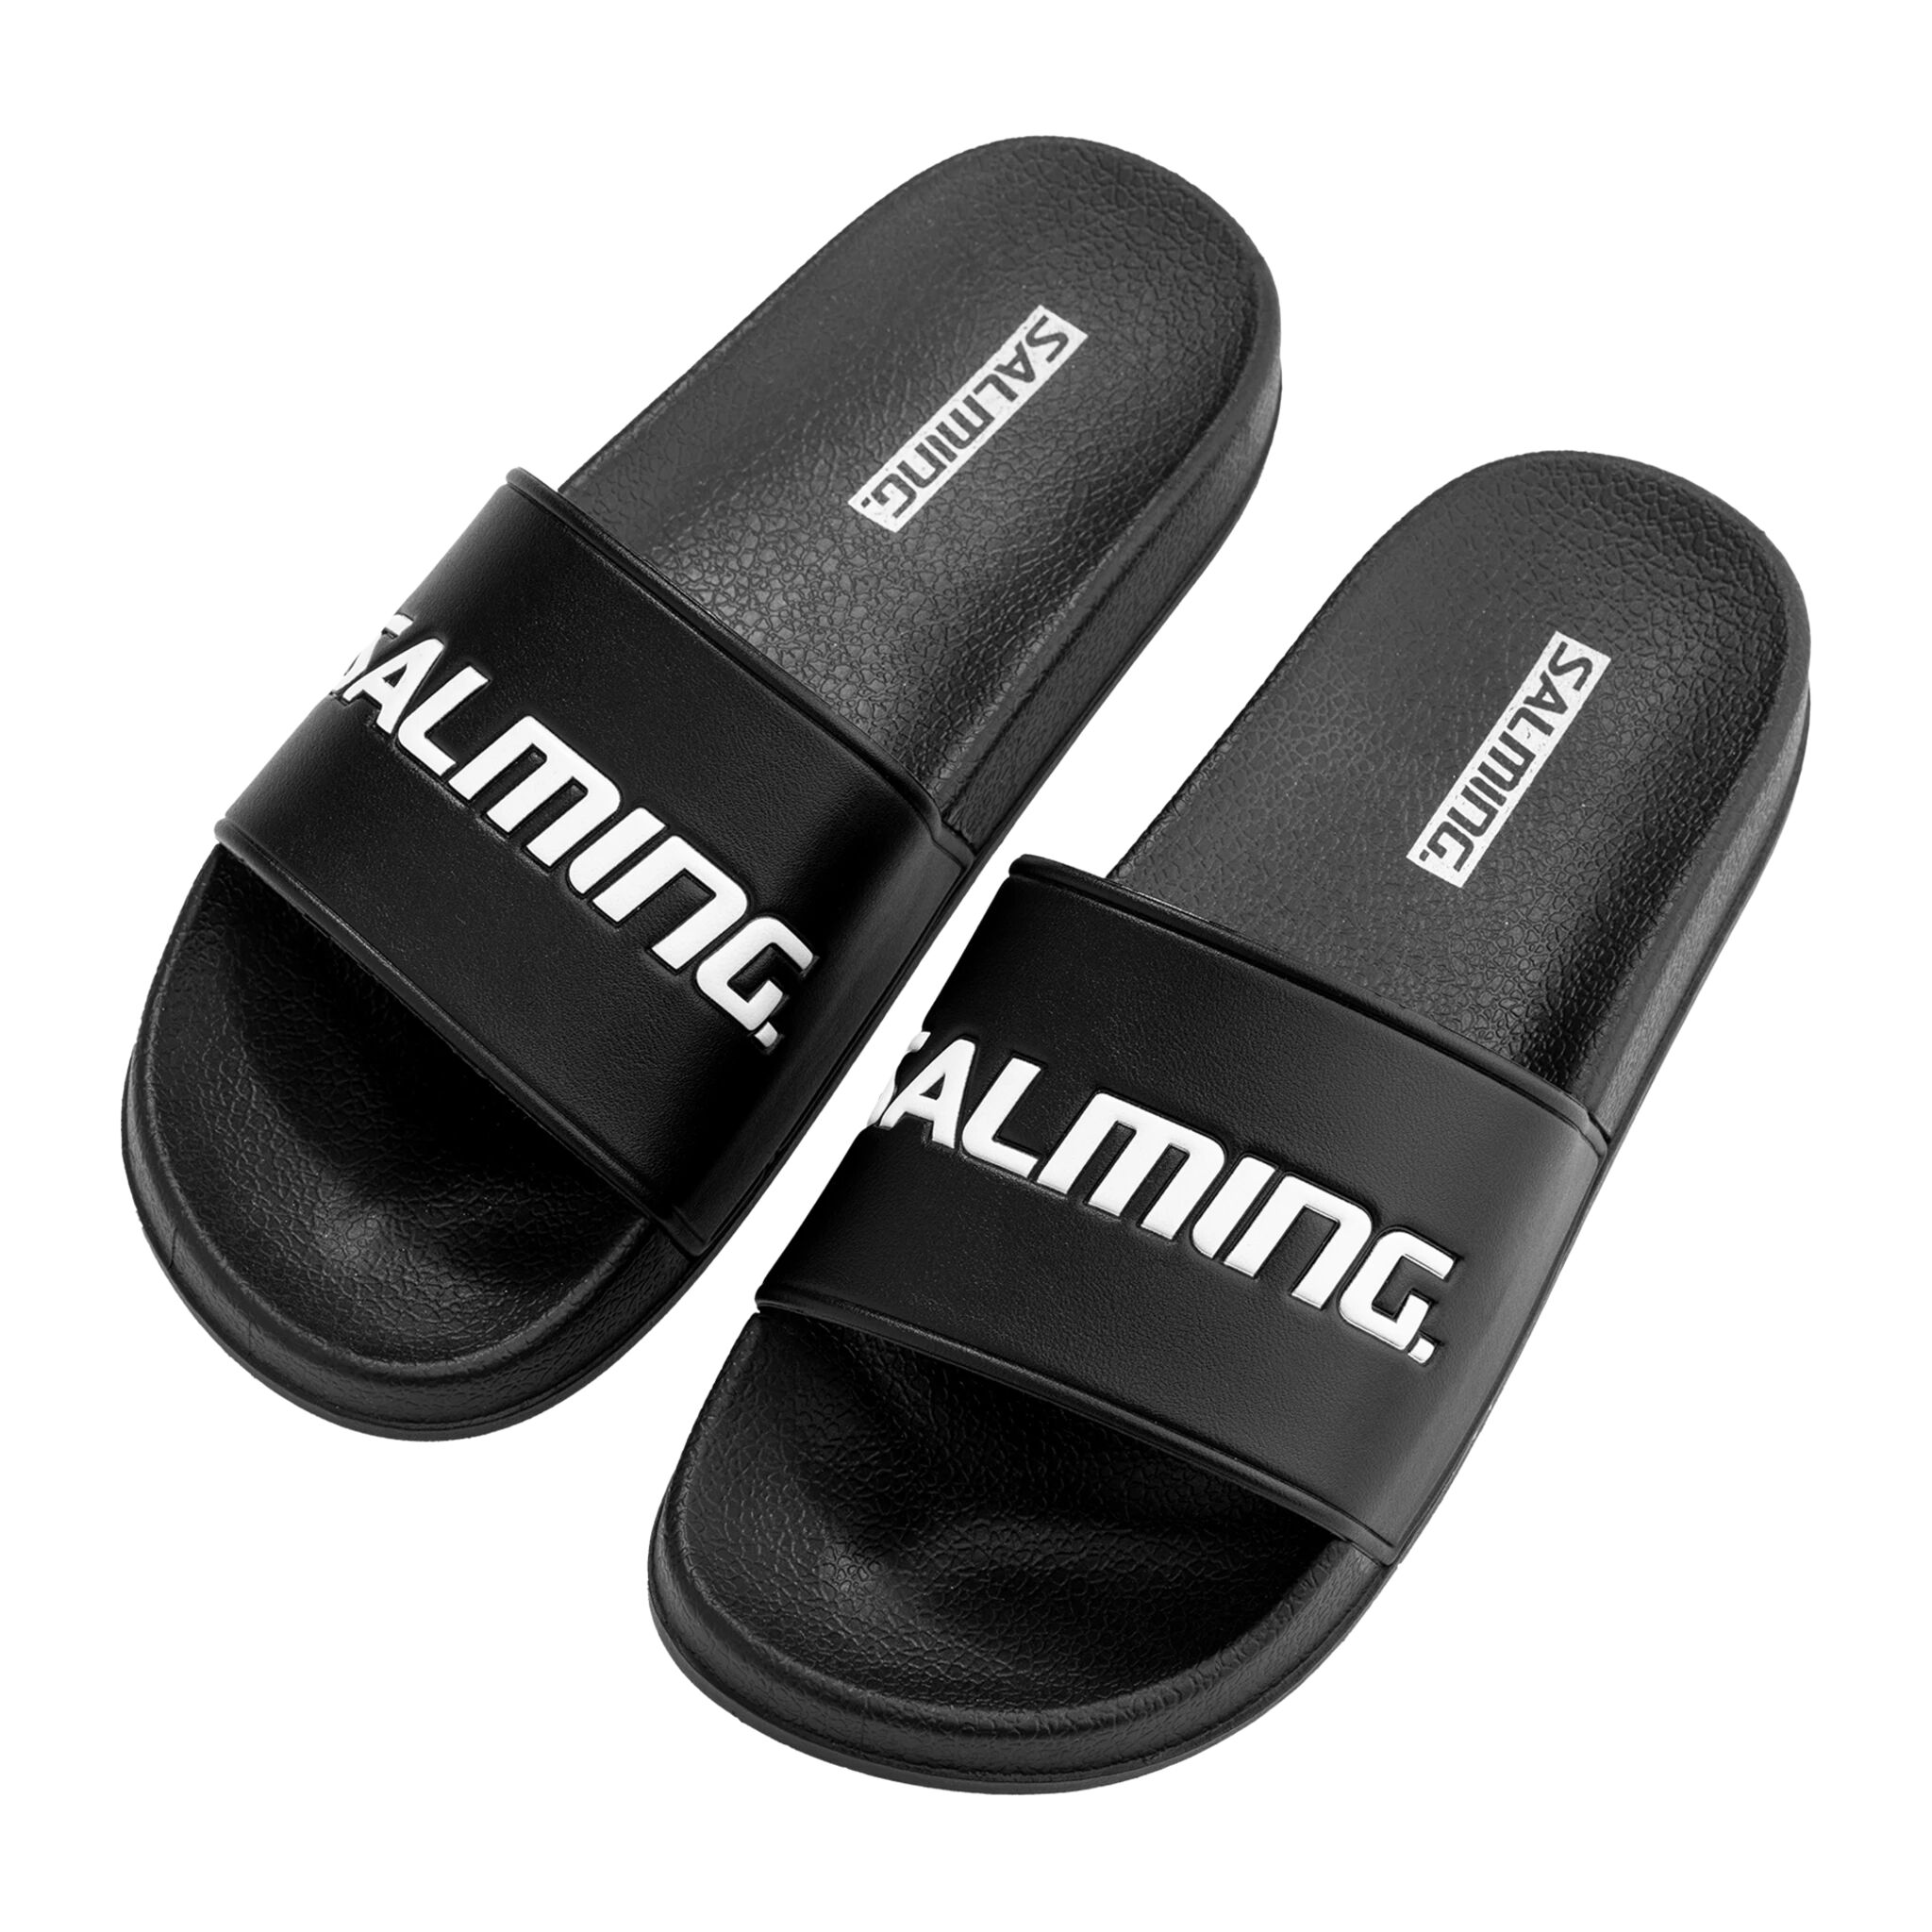 Salming Comfort Shower Sandal JR/SR-21/22, slippers 48/49 BLACK